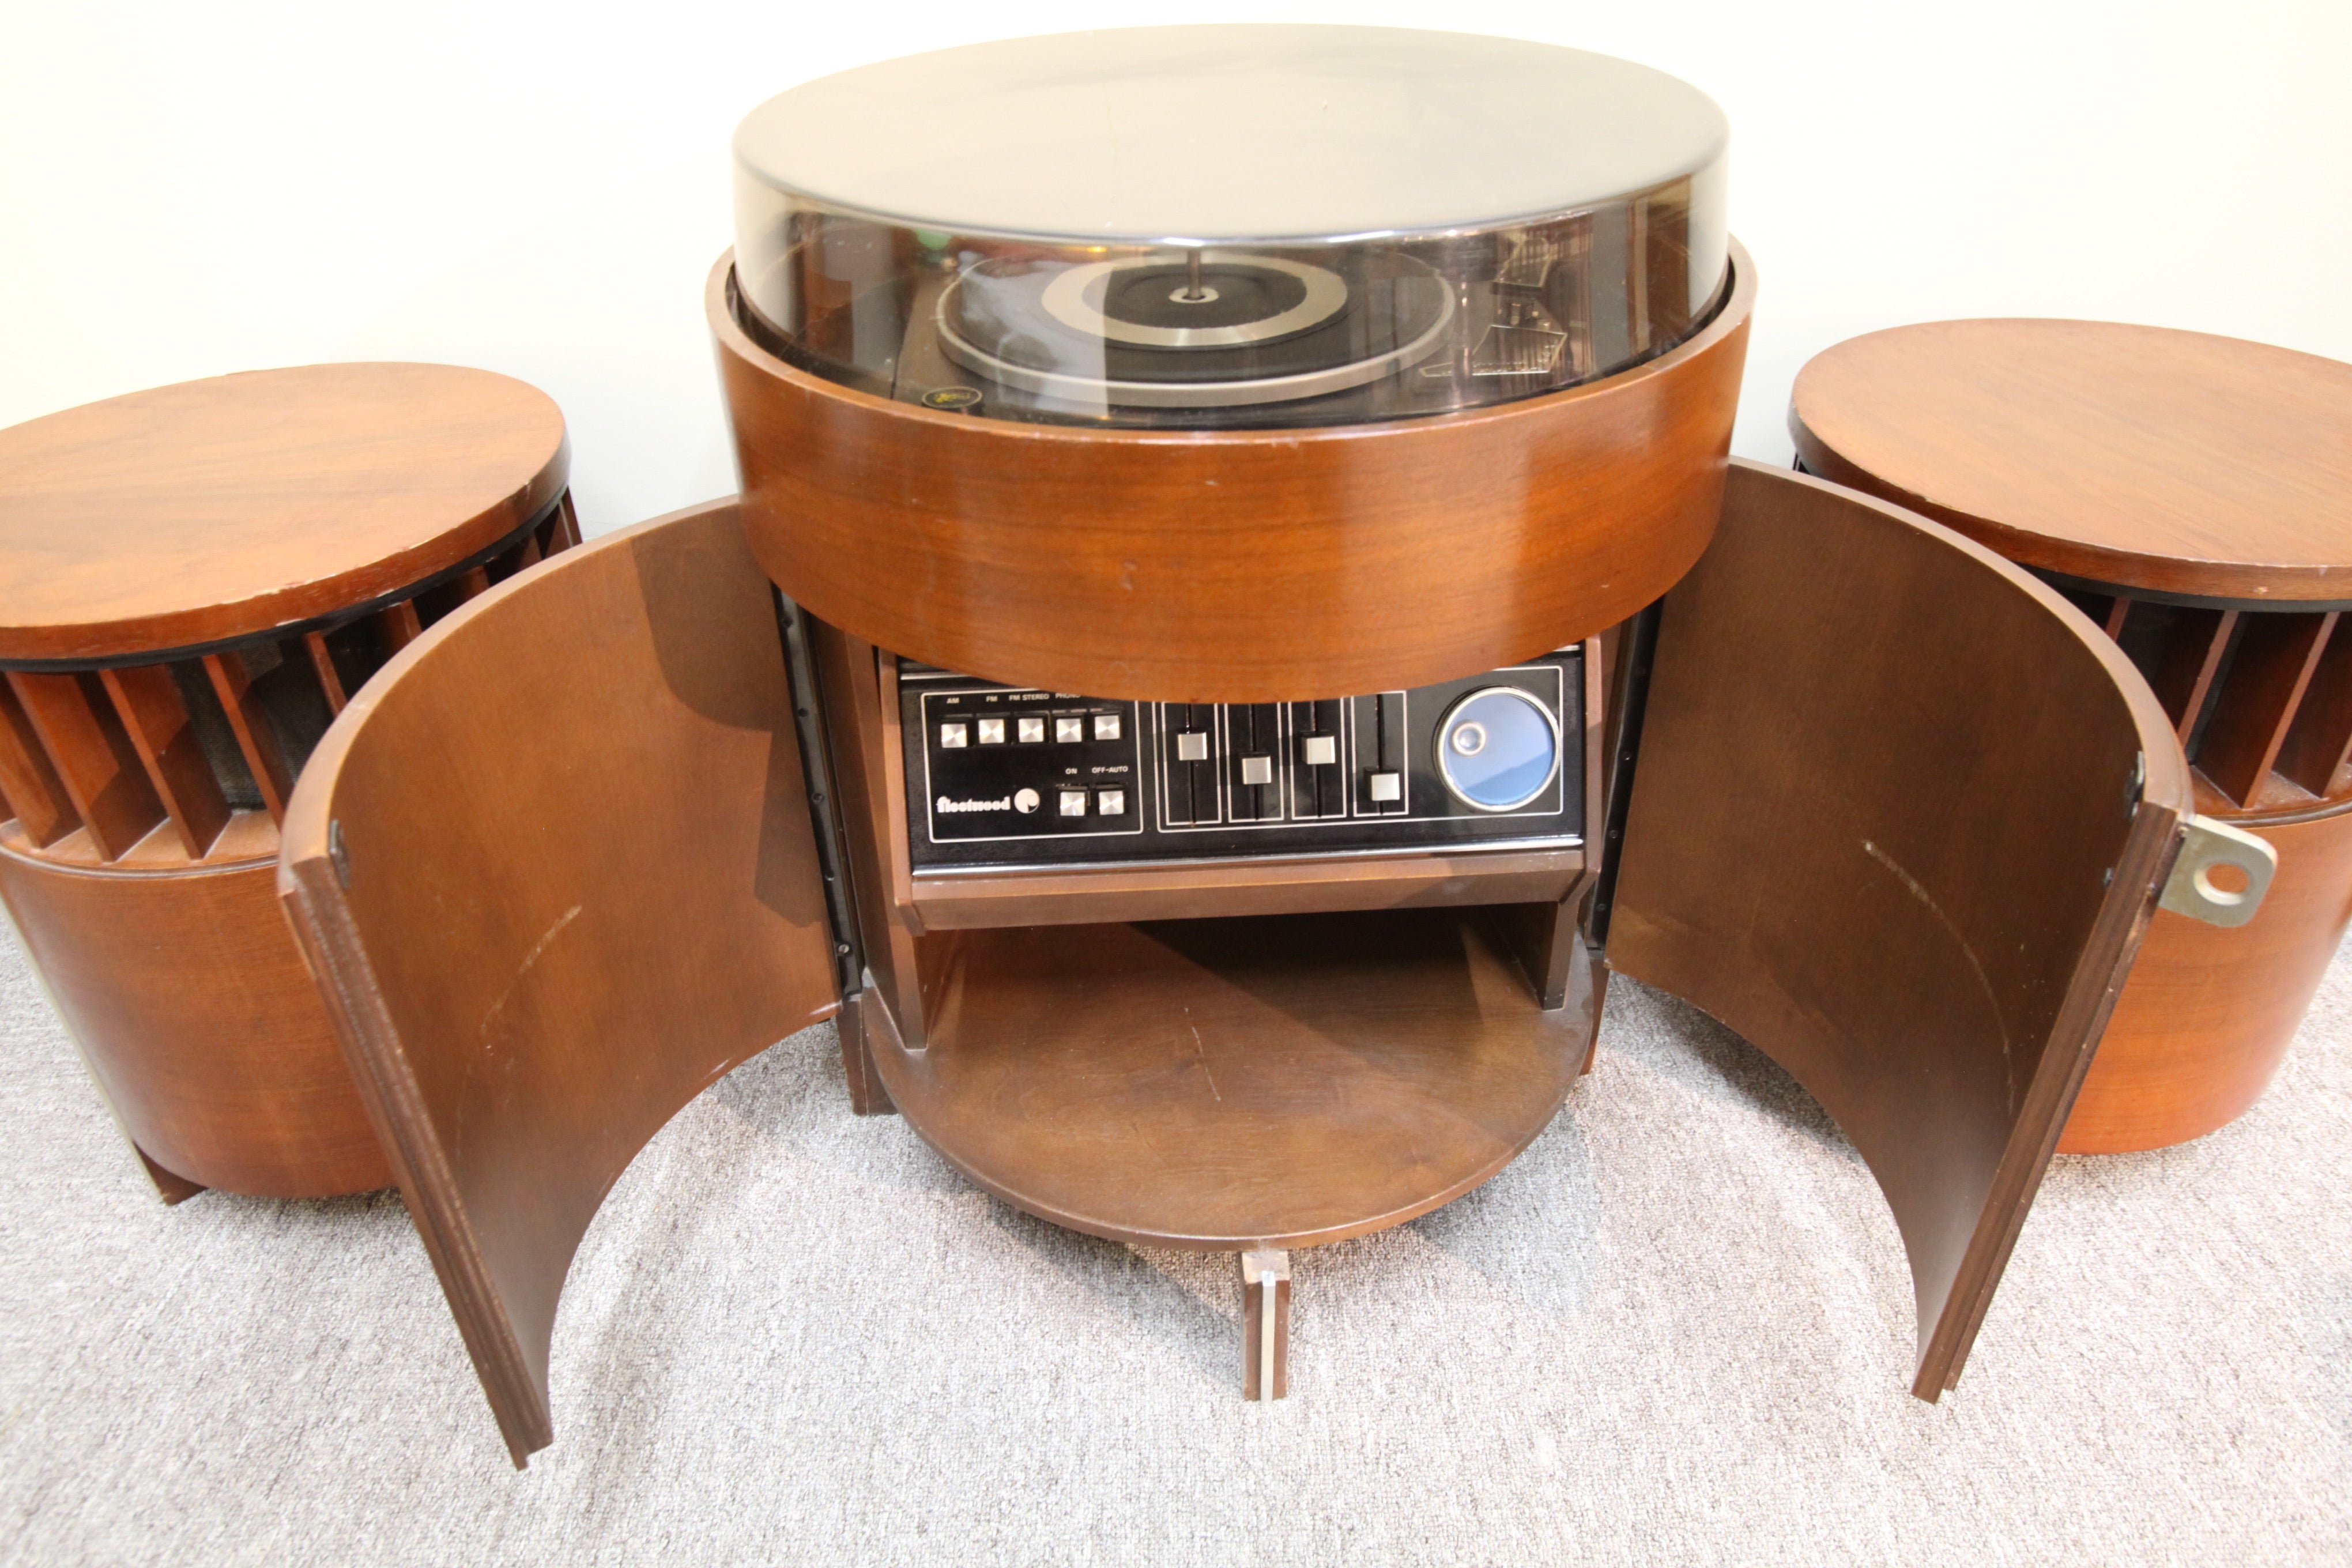 Vintage Fleetwood Stereo (radio/record player 1960's)